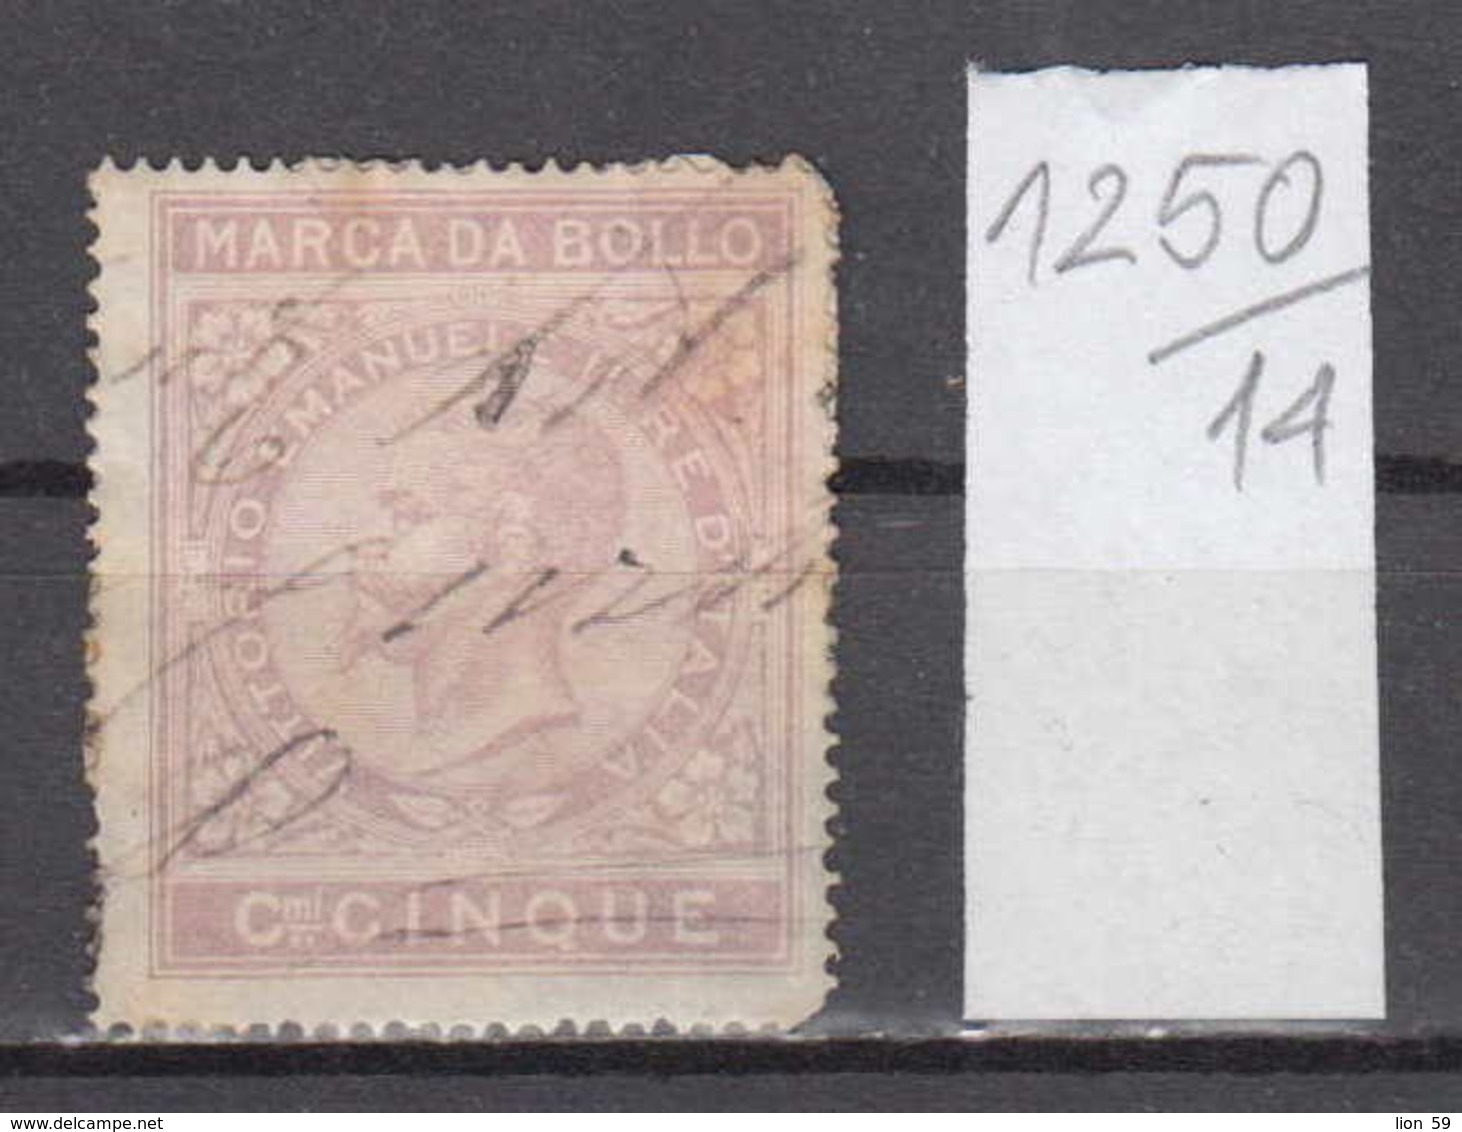 14K1250 / MARCA DA BOLLO , Cmi CINQUE , Vittorio Emanuele II Revenue Fiscaux Steuermarken Fiscal , Italia Italy - Steuermarken